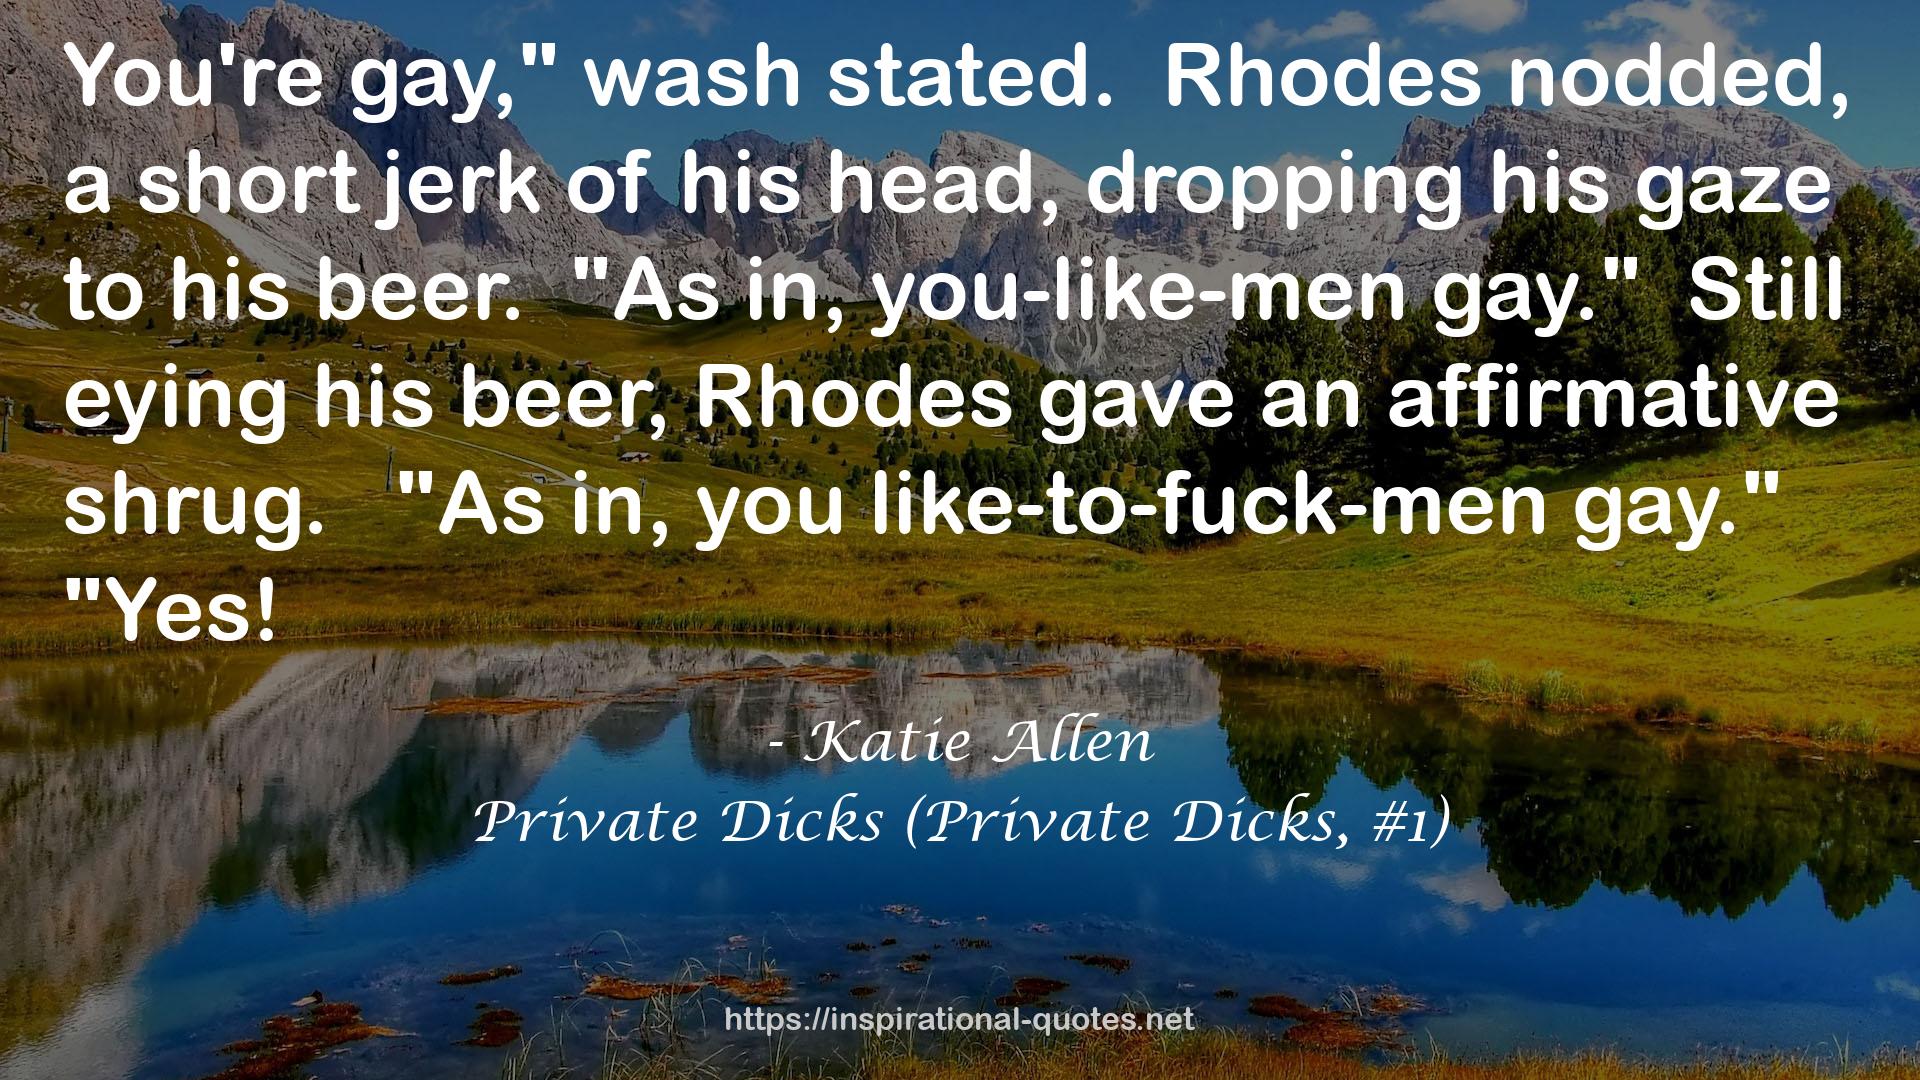 Private Dicks (Private Dicks, #1) QUOTES